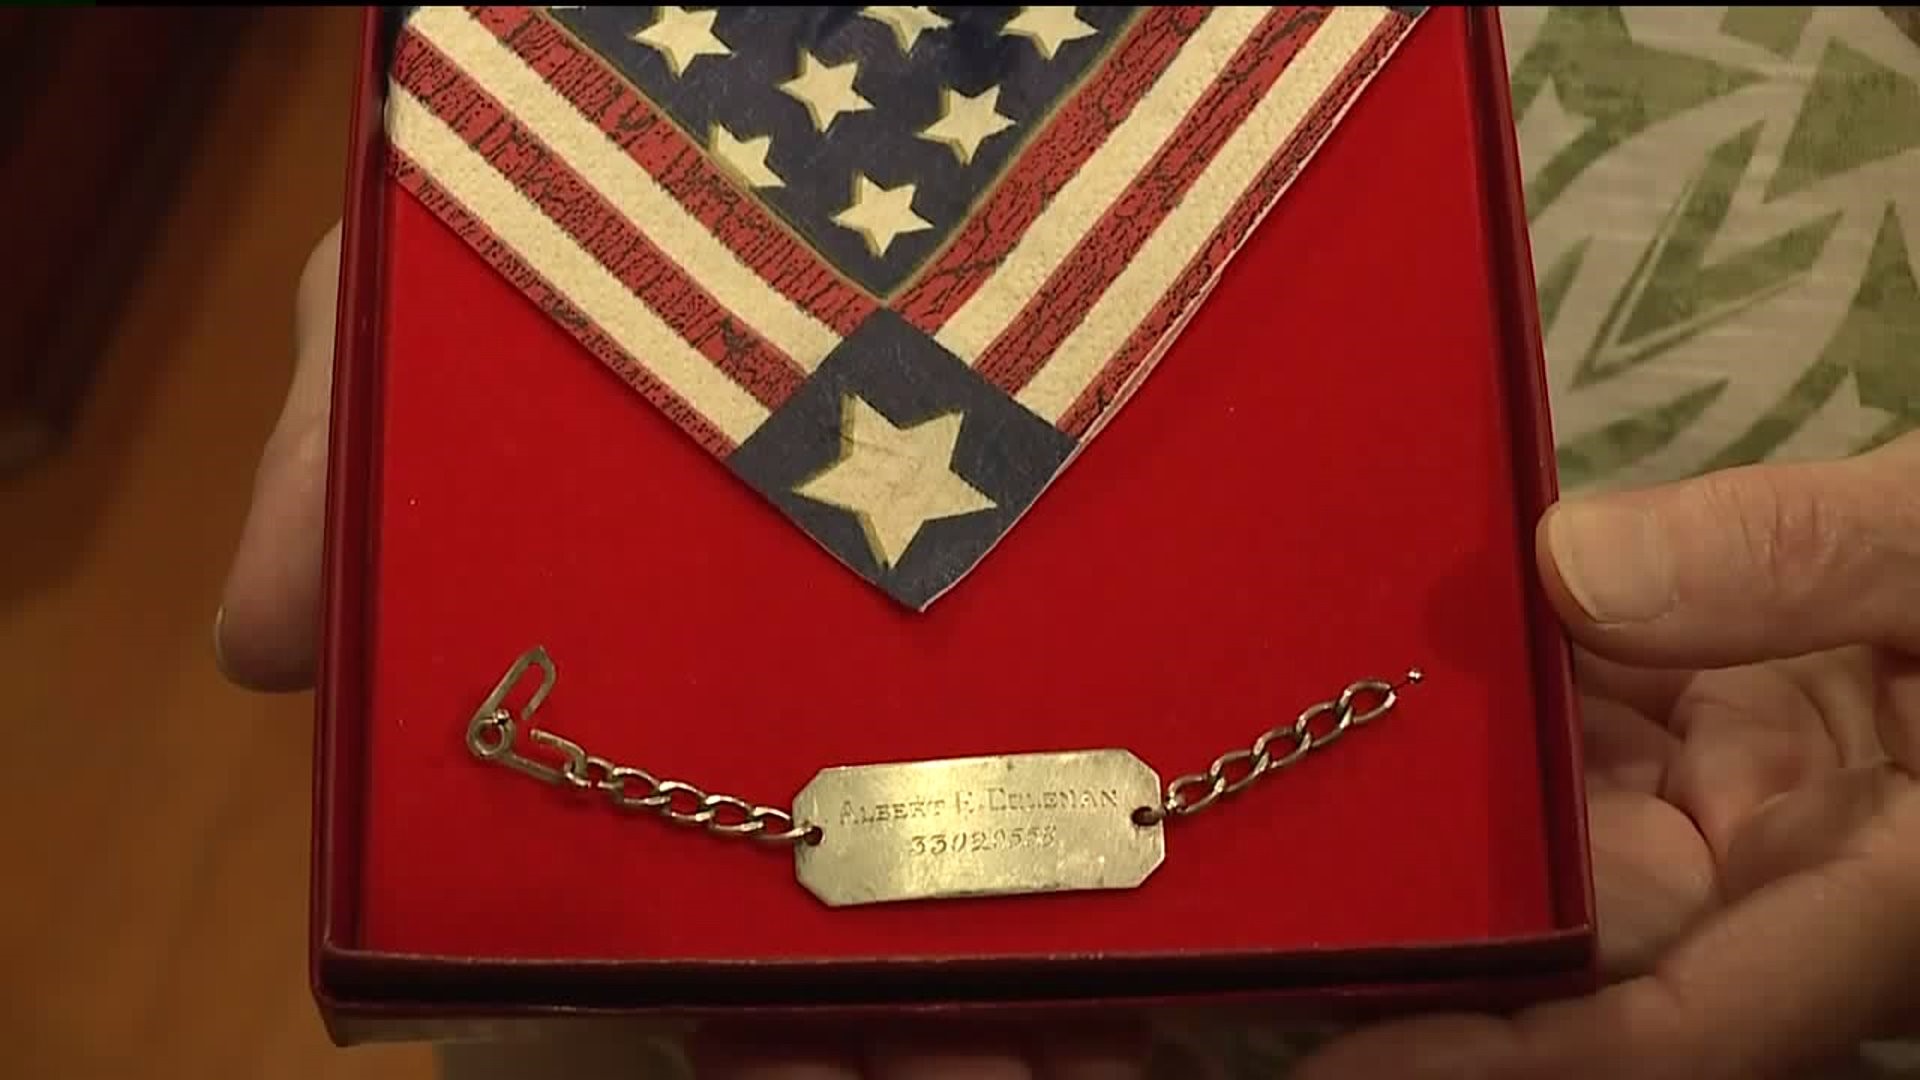 WWII Soldier's Bracelet Finally Returns Home